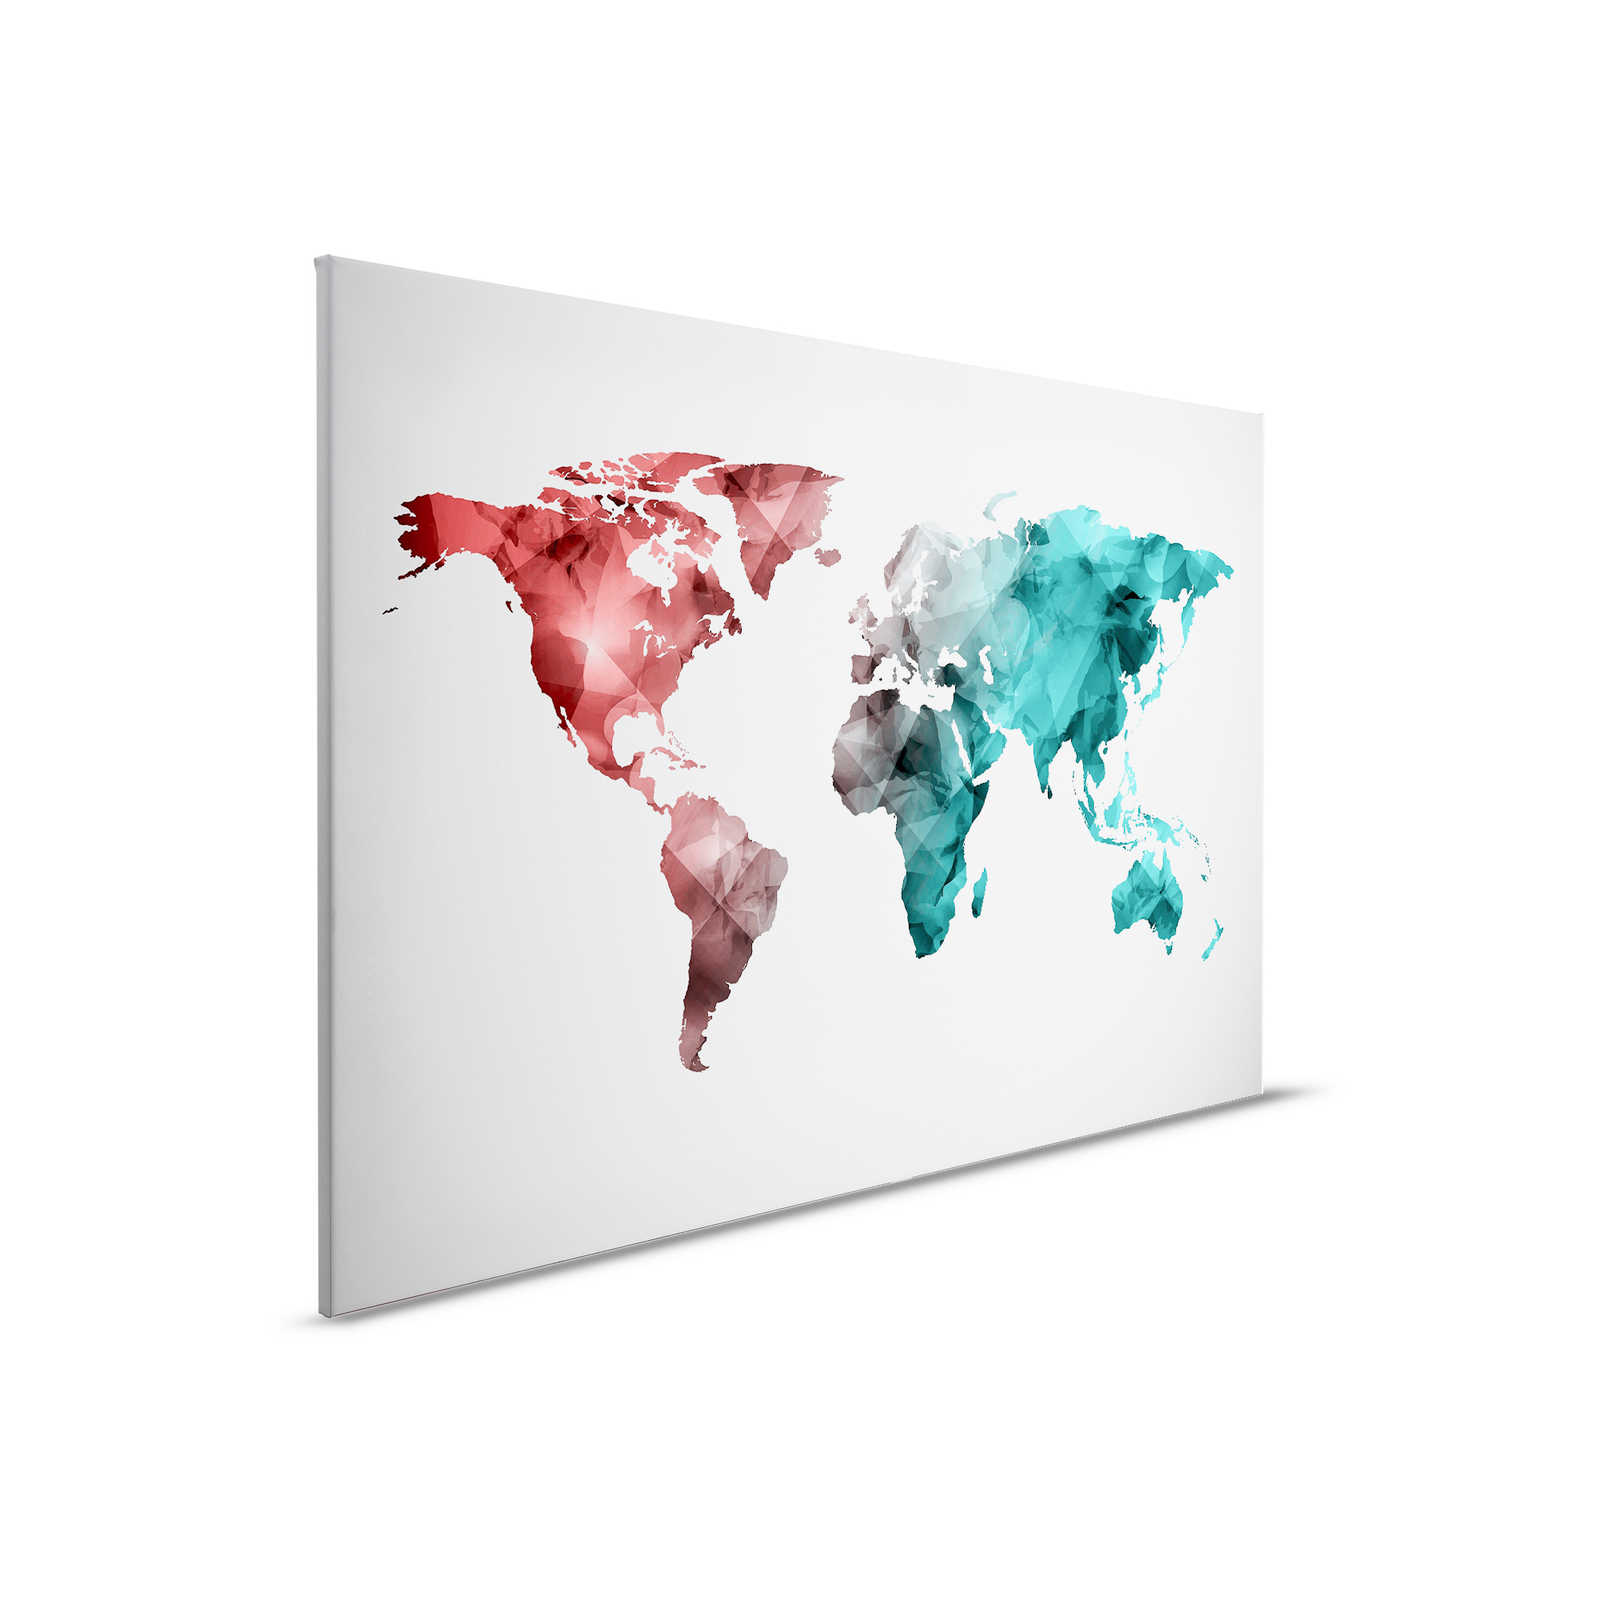 Lienzo con mapamundi de elementos gráficos | WorldGrafic 2 - 0,90 m x 0,60 m
